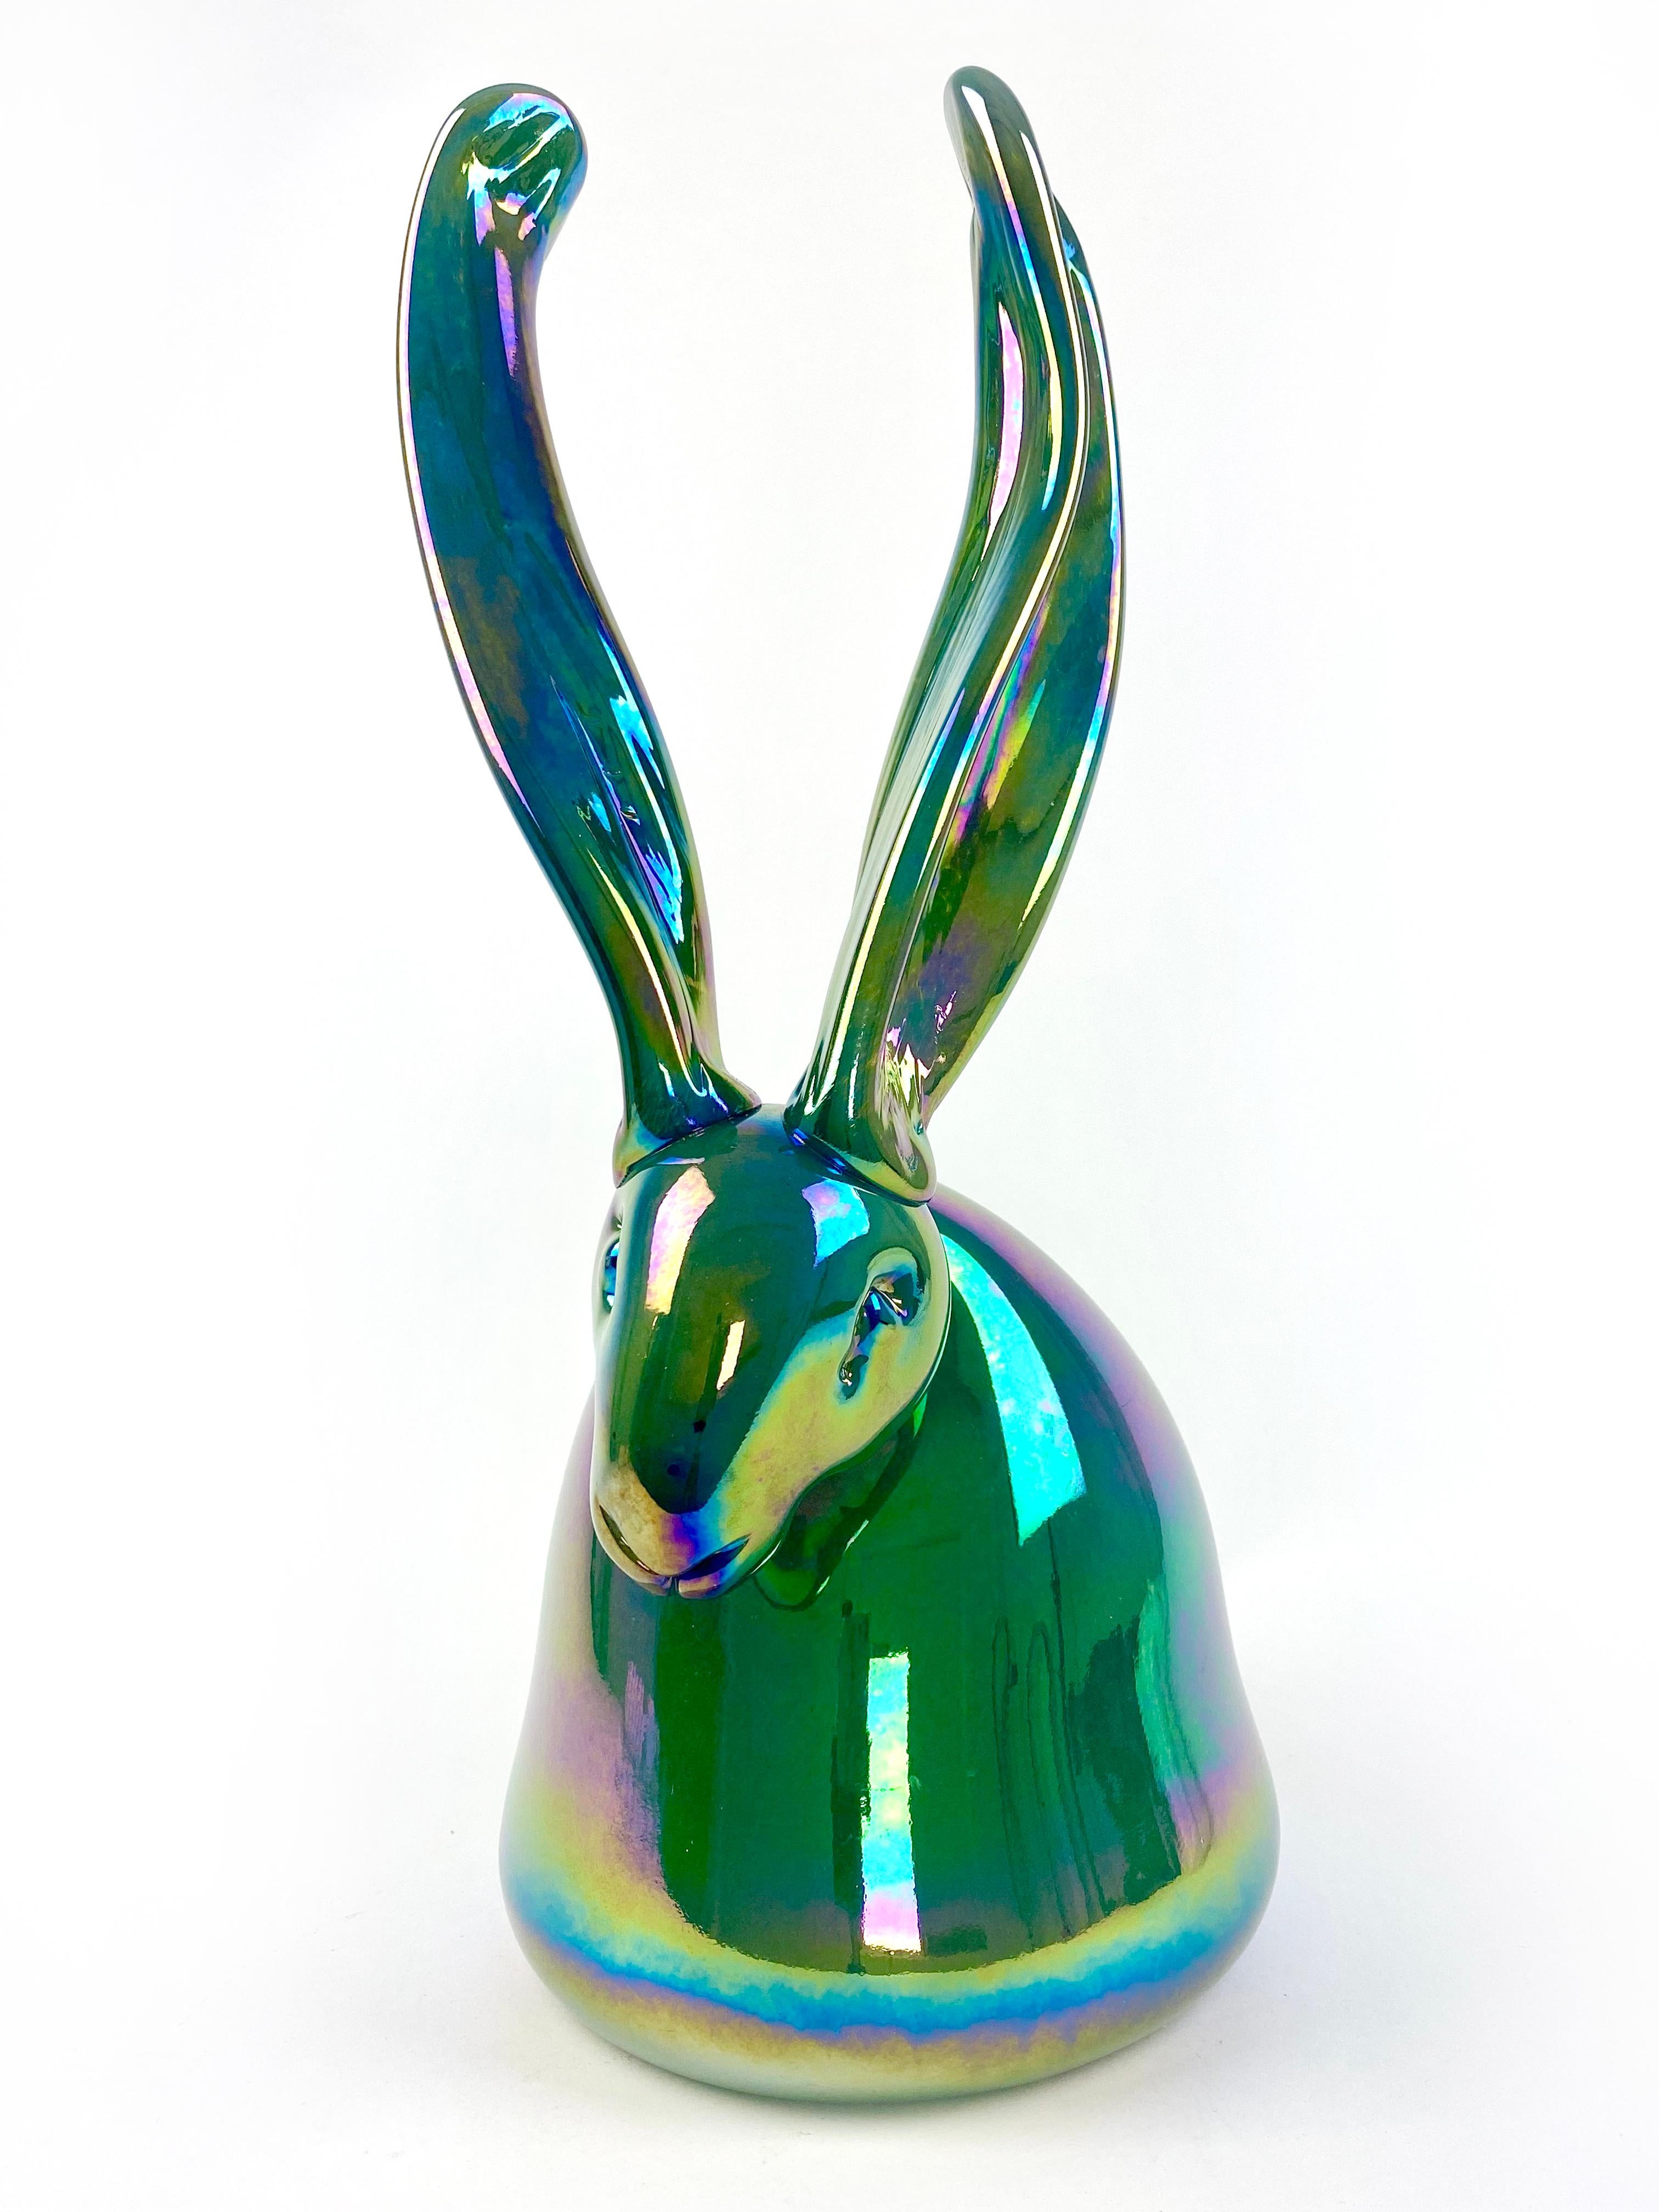 Clover Green Bunny "Bunny Sculpture" Unique Blown Glass Sculpture